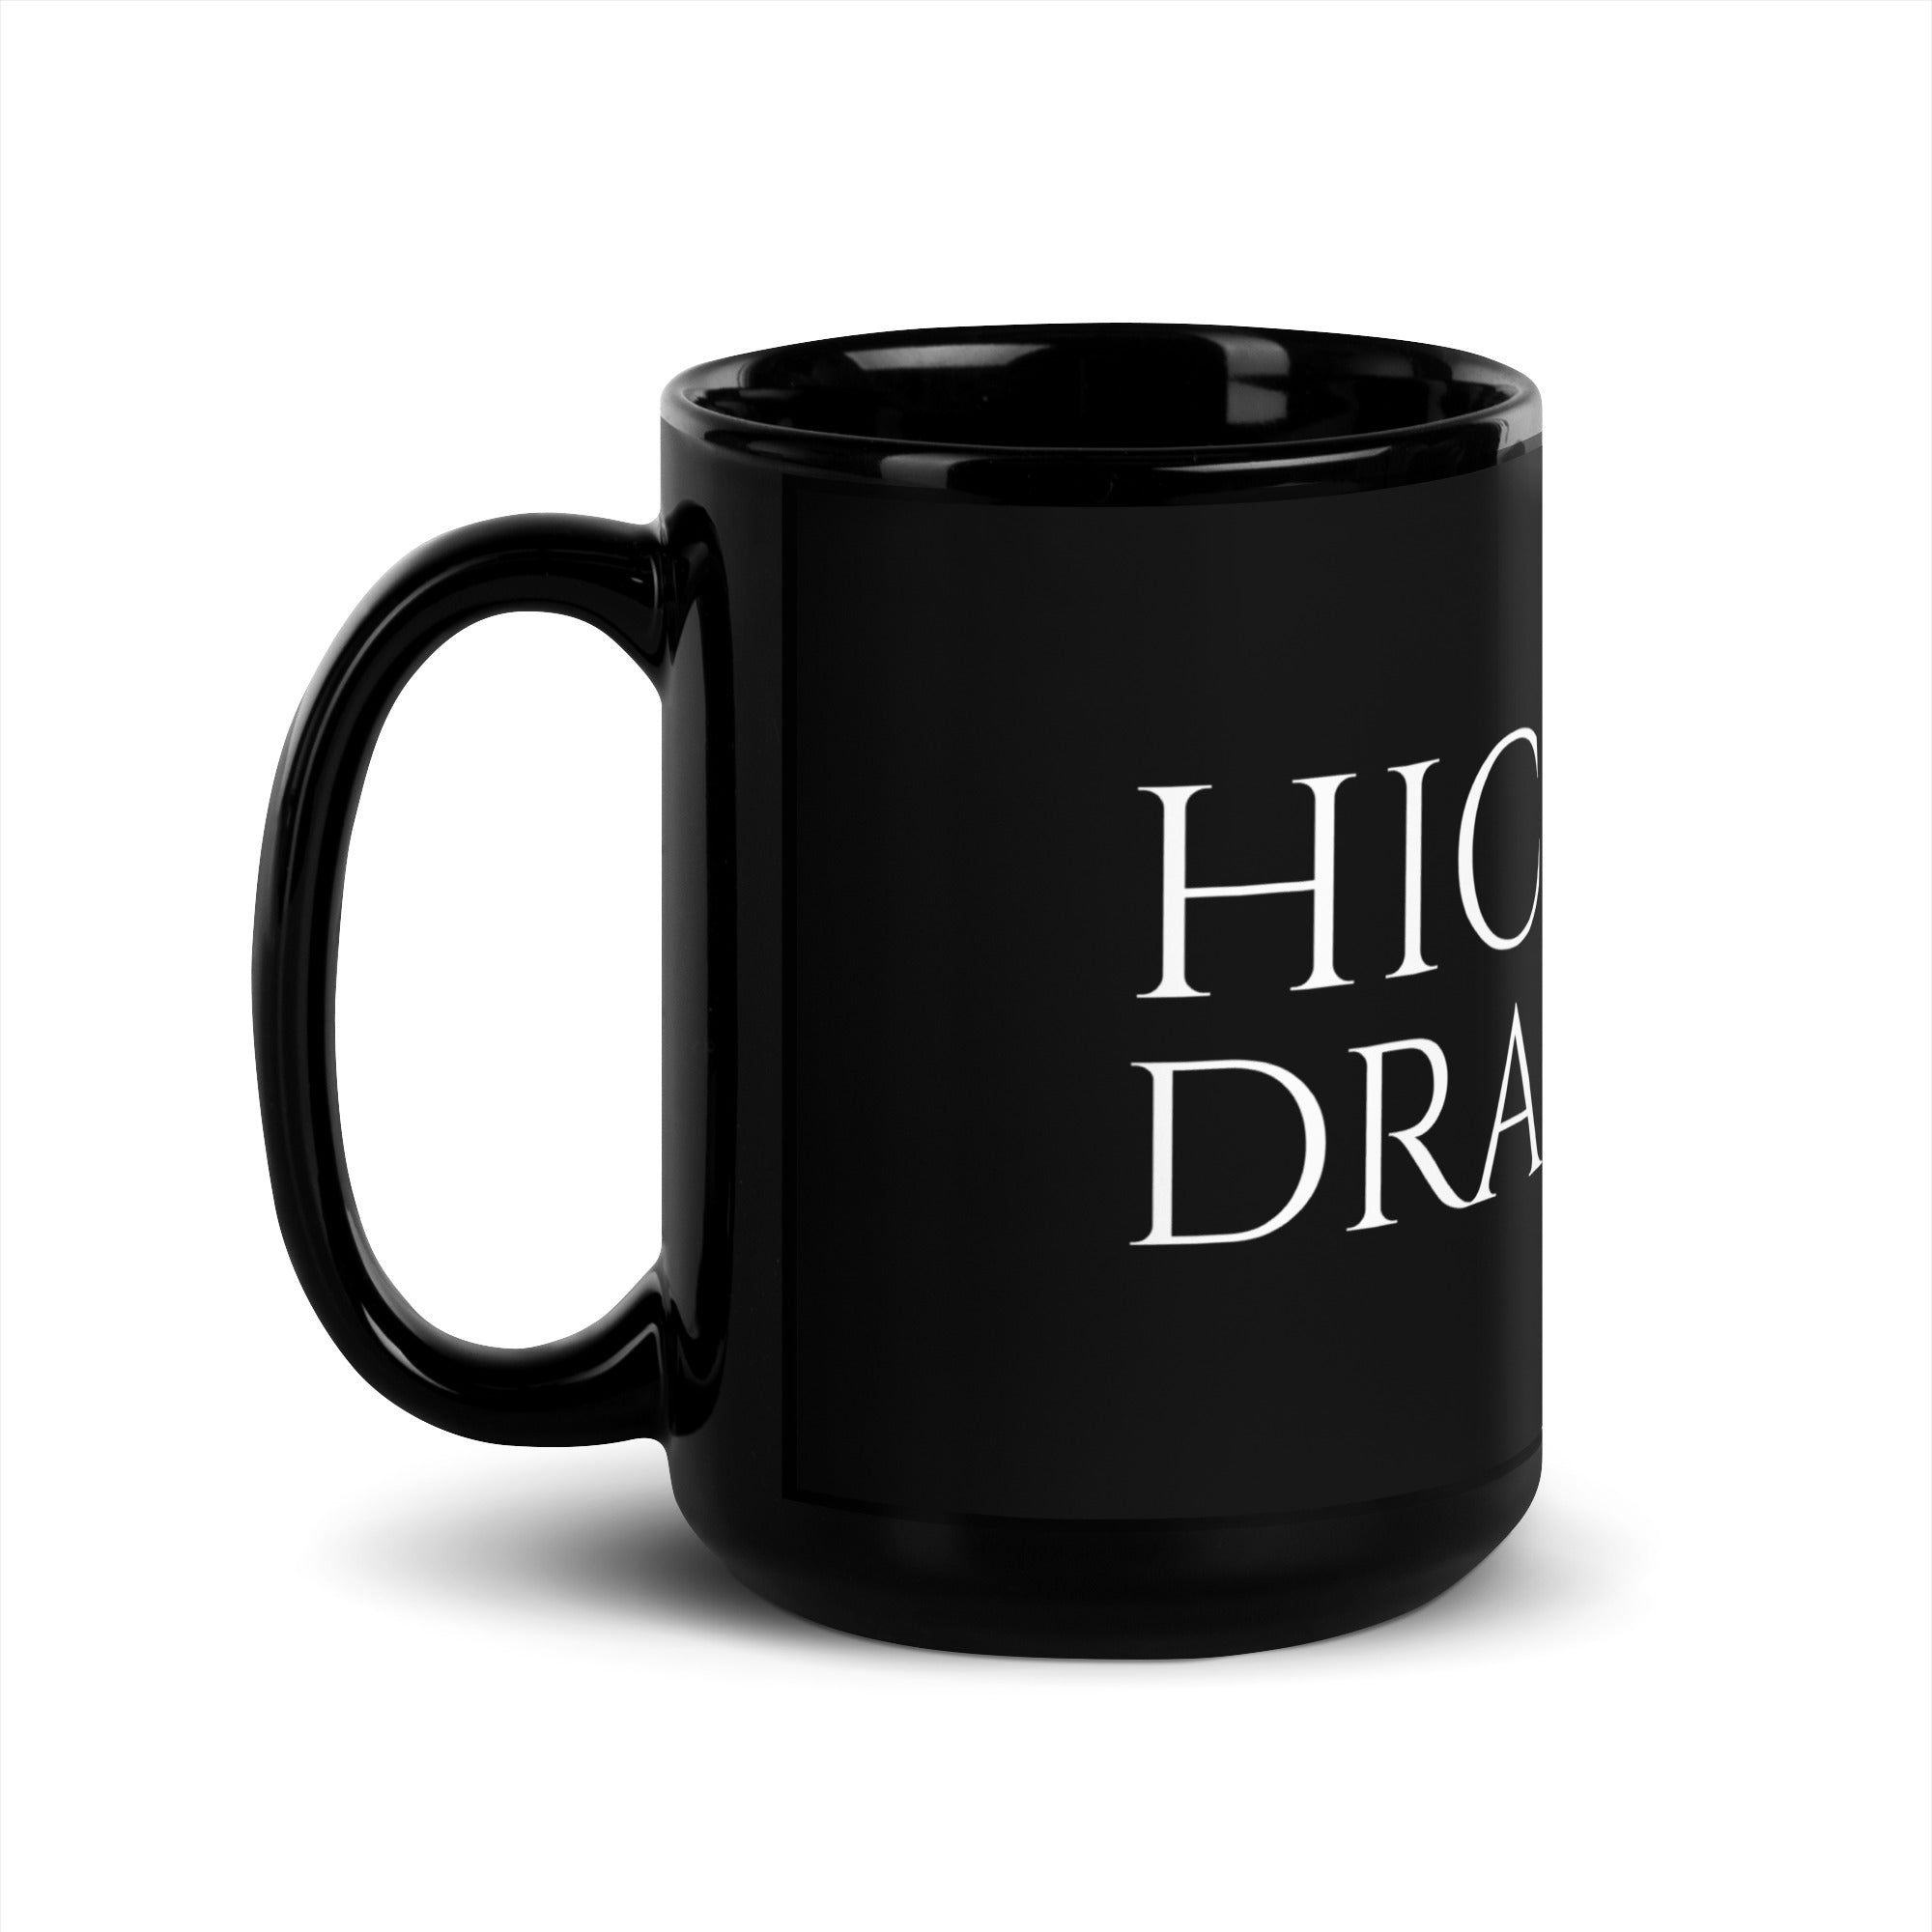 Hic Sunt Dracones - Here Be Dragons - Latin Language Black Glossy Mug